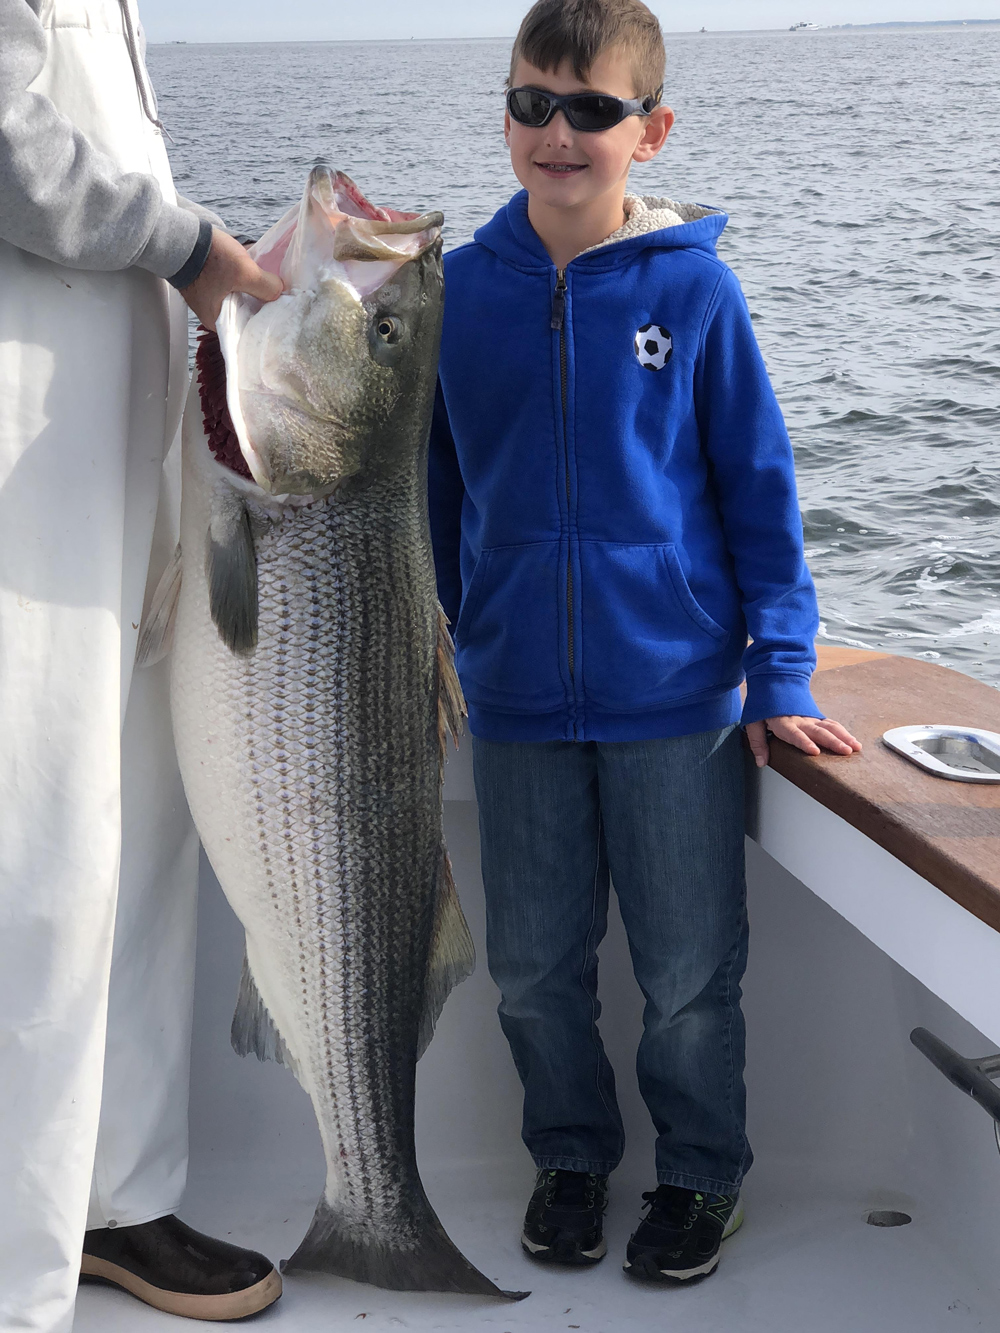 April 2018 Lower Chesapeake Bay Fishing Report | FishTalk Magazine